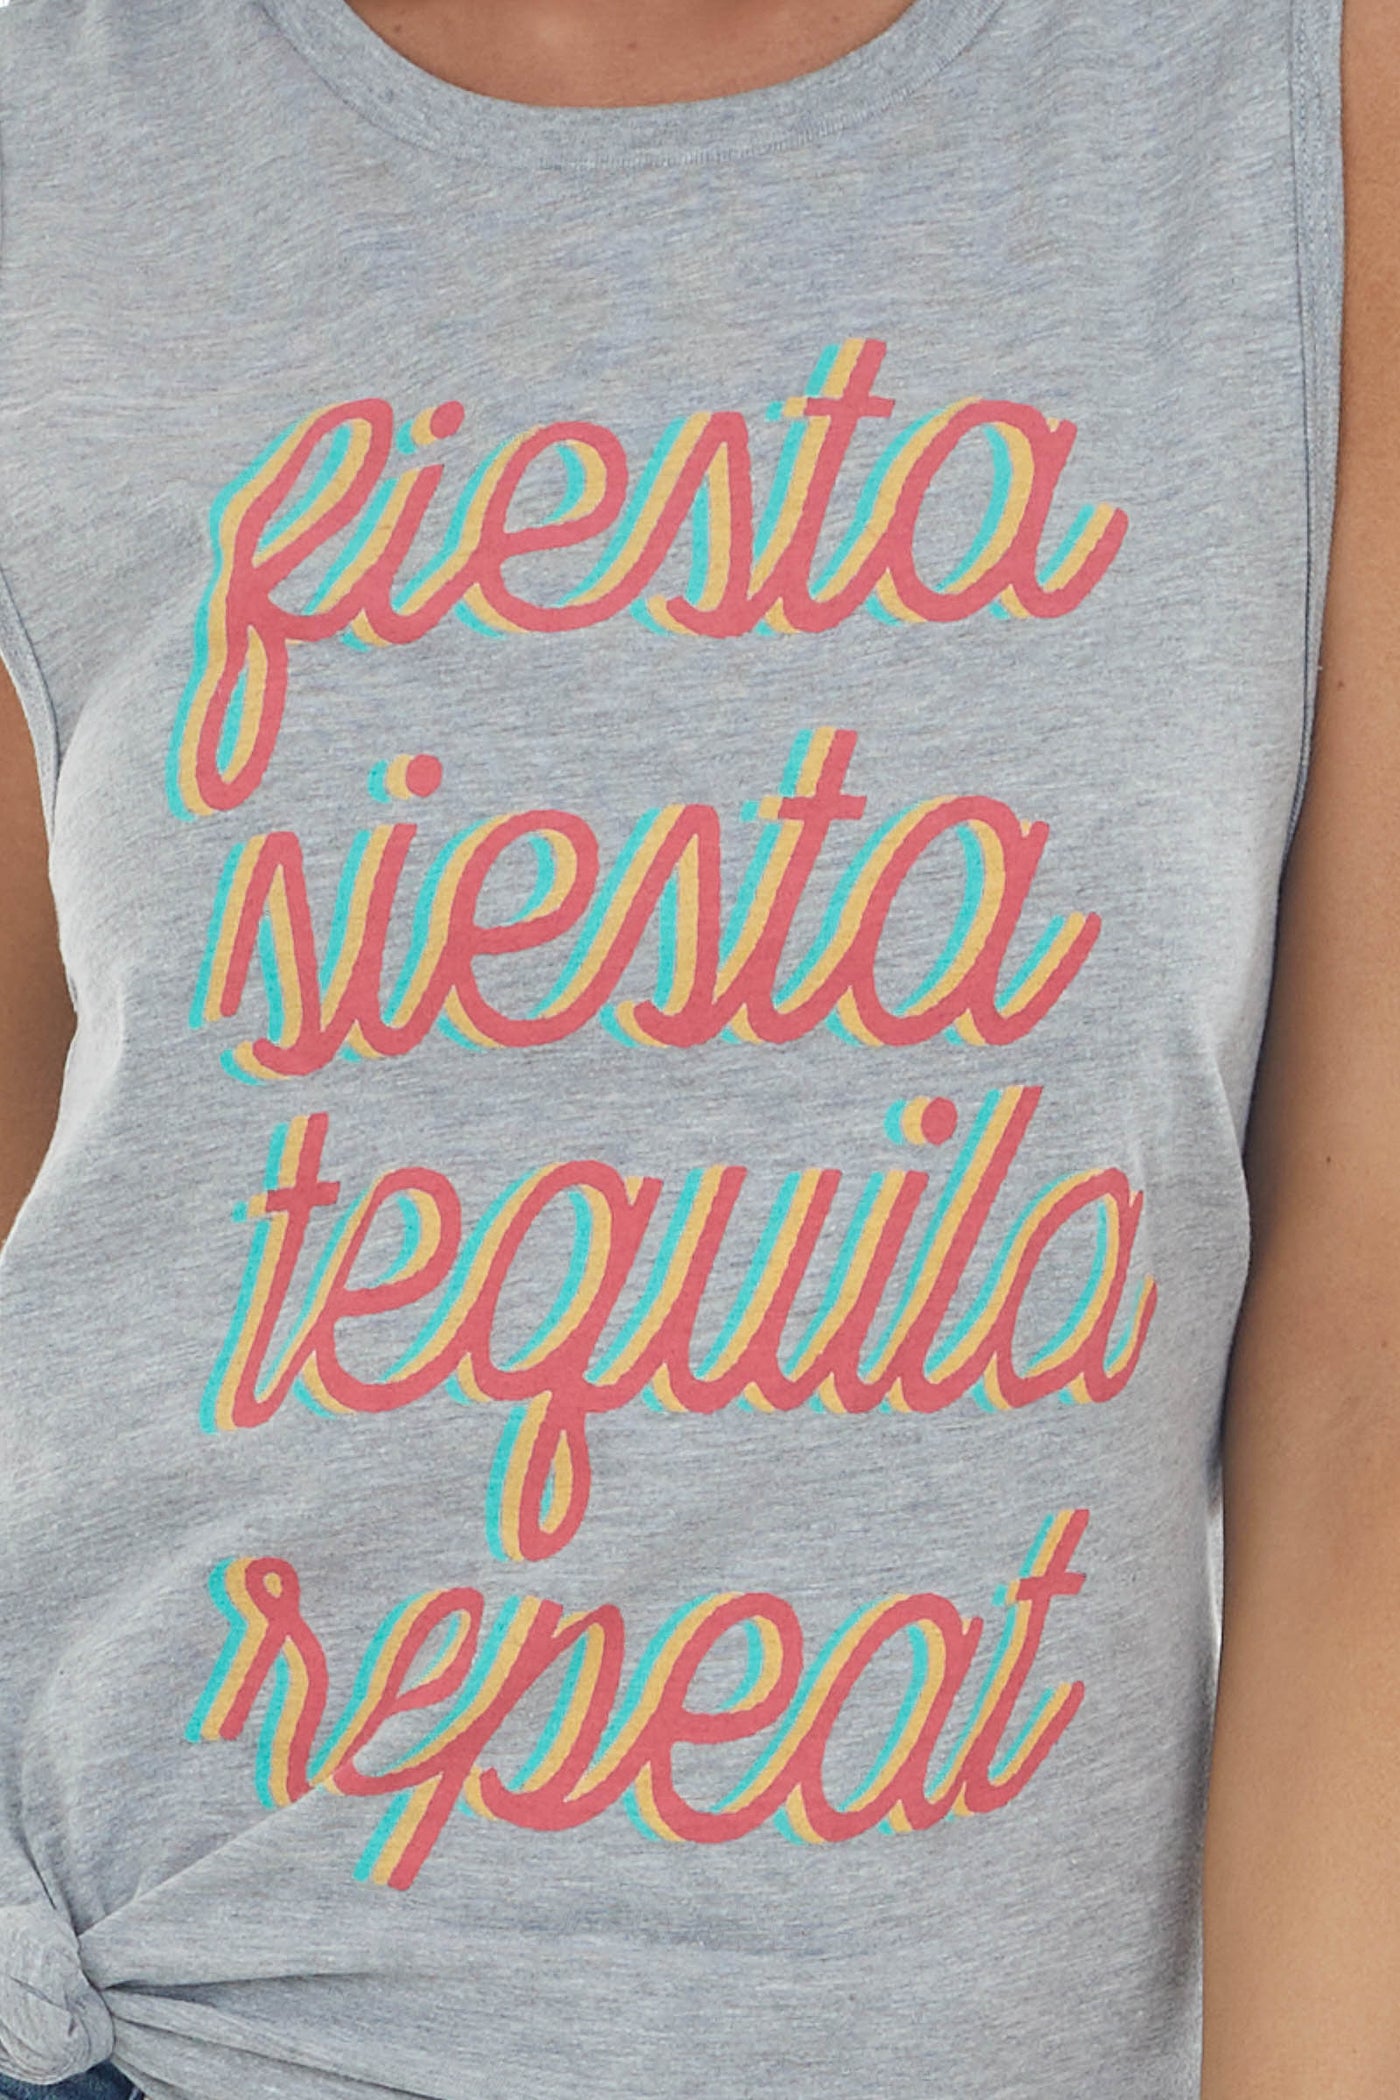 Heather Grey 'Fiesta Siesta Tequila' Tank Top